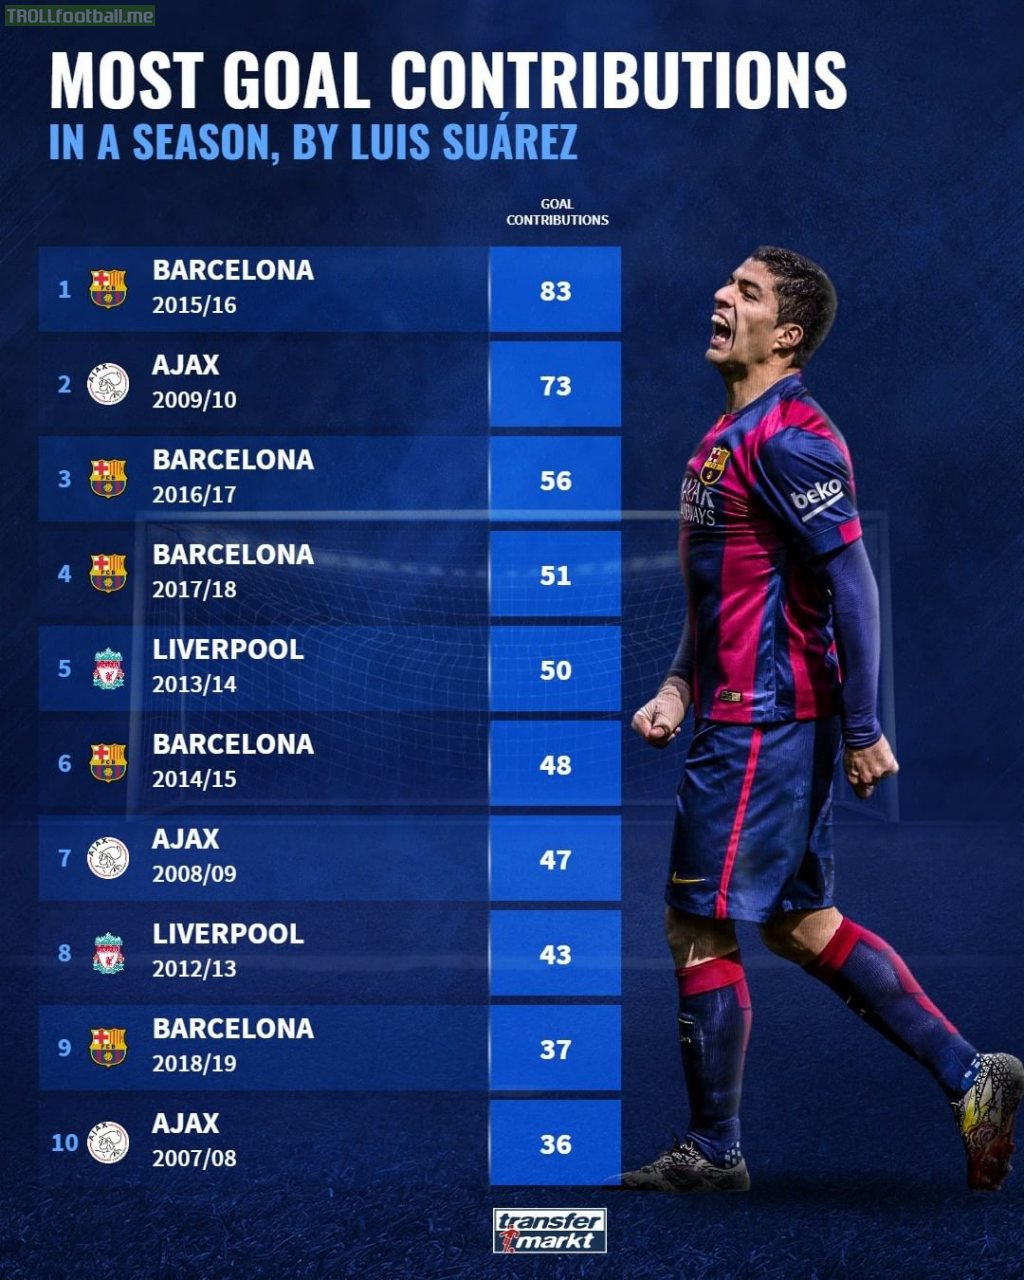 [Transfermarkt] Luis Suarez's most prolific seasons